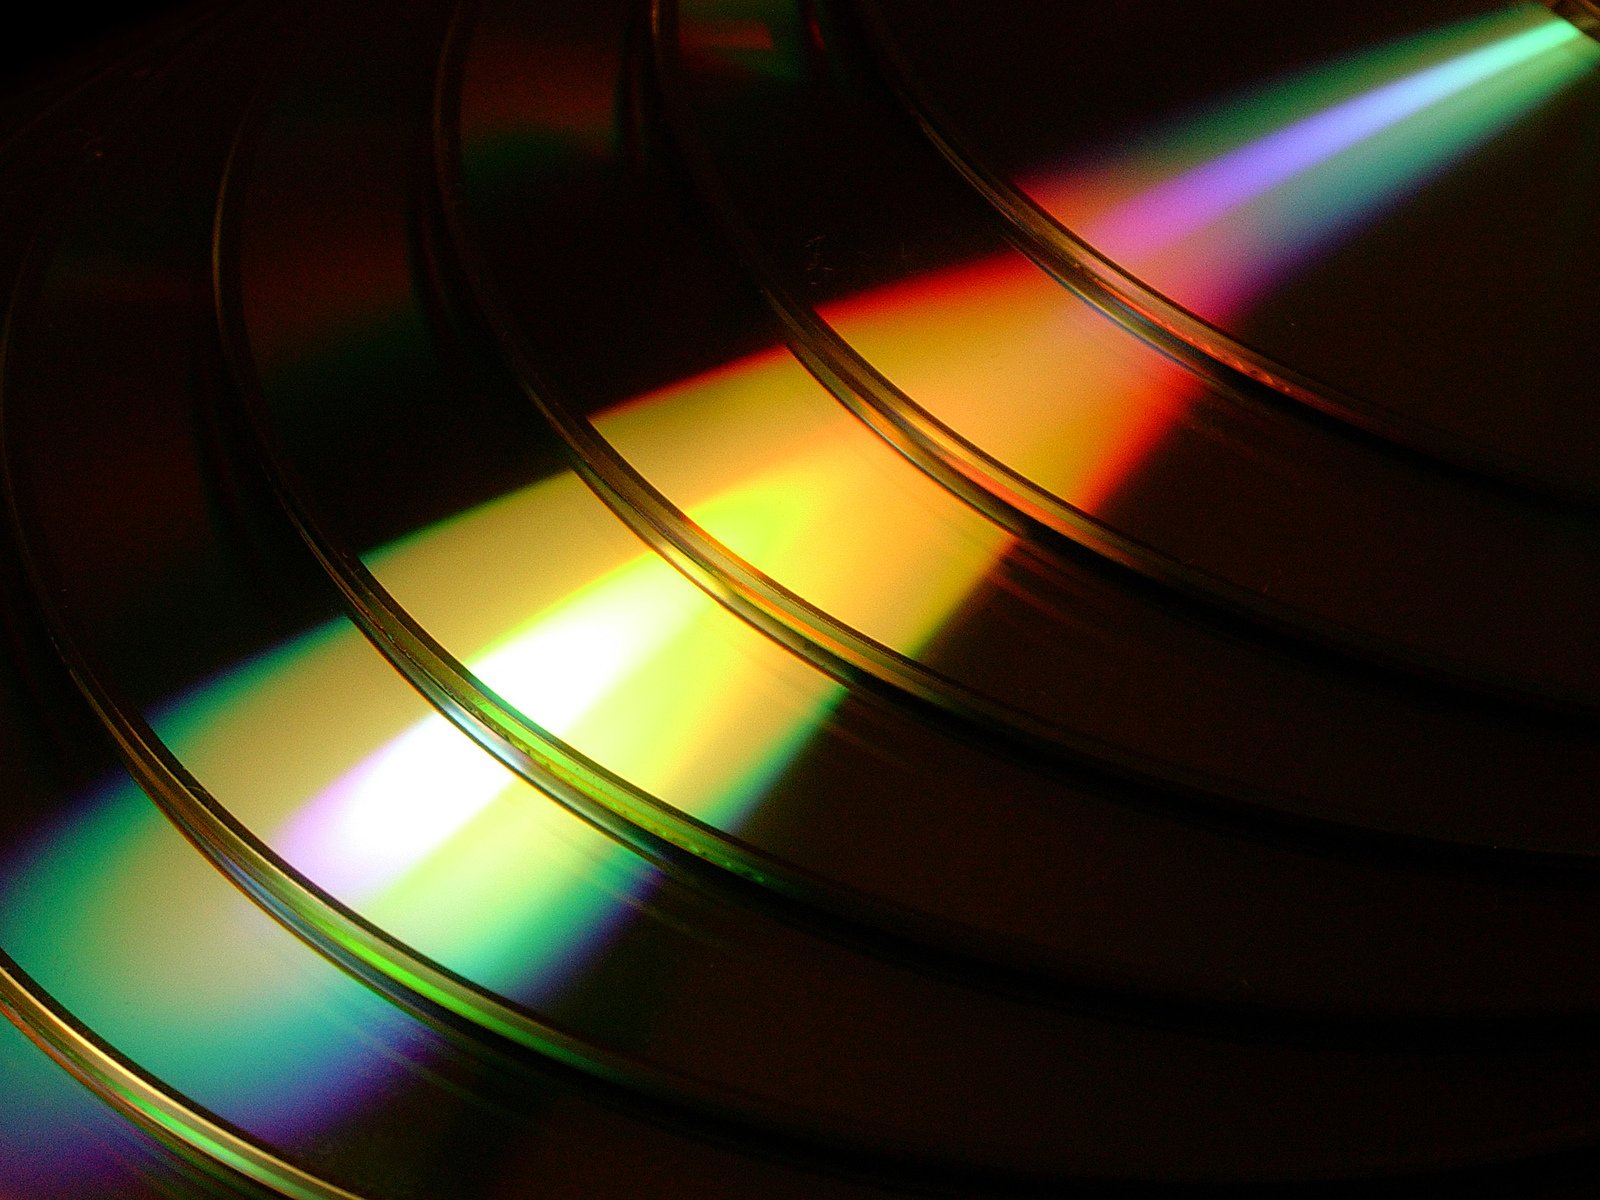 a rainbow light shows through several cd's